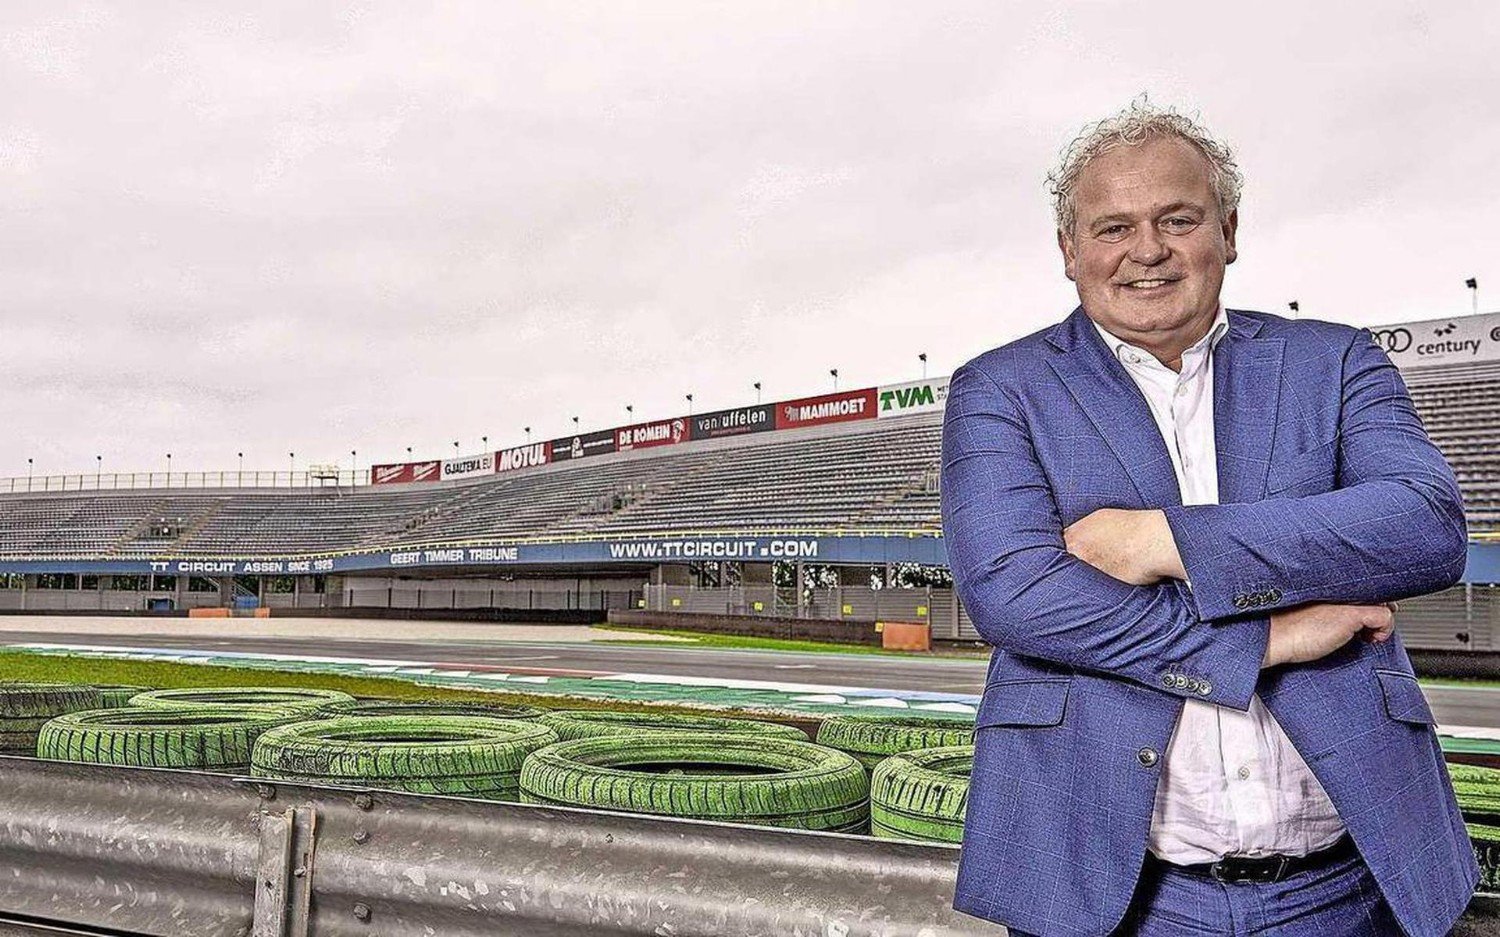 Arjan Bos, chairman of the TT Circuit Assen in the Netherlands